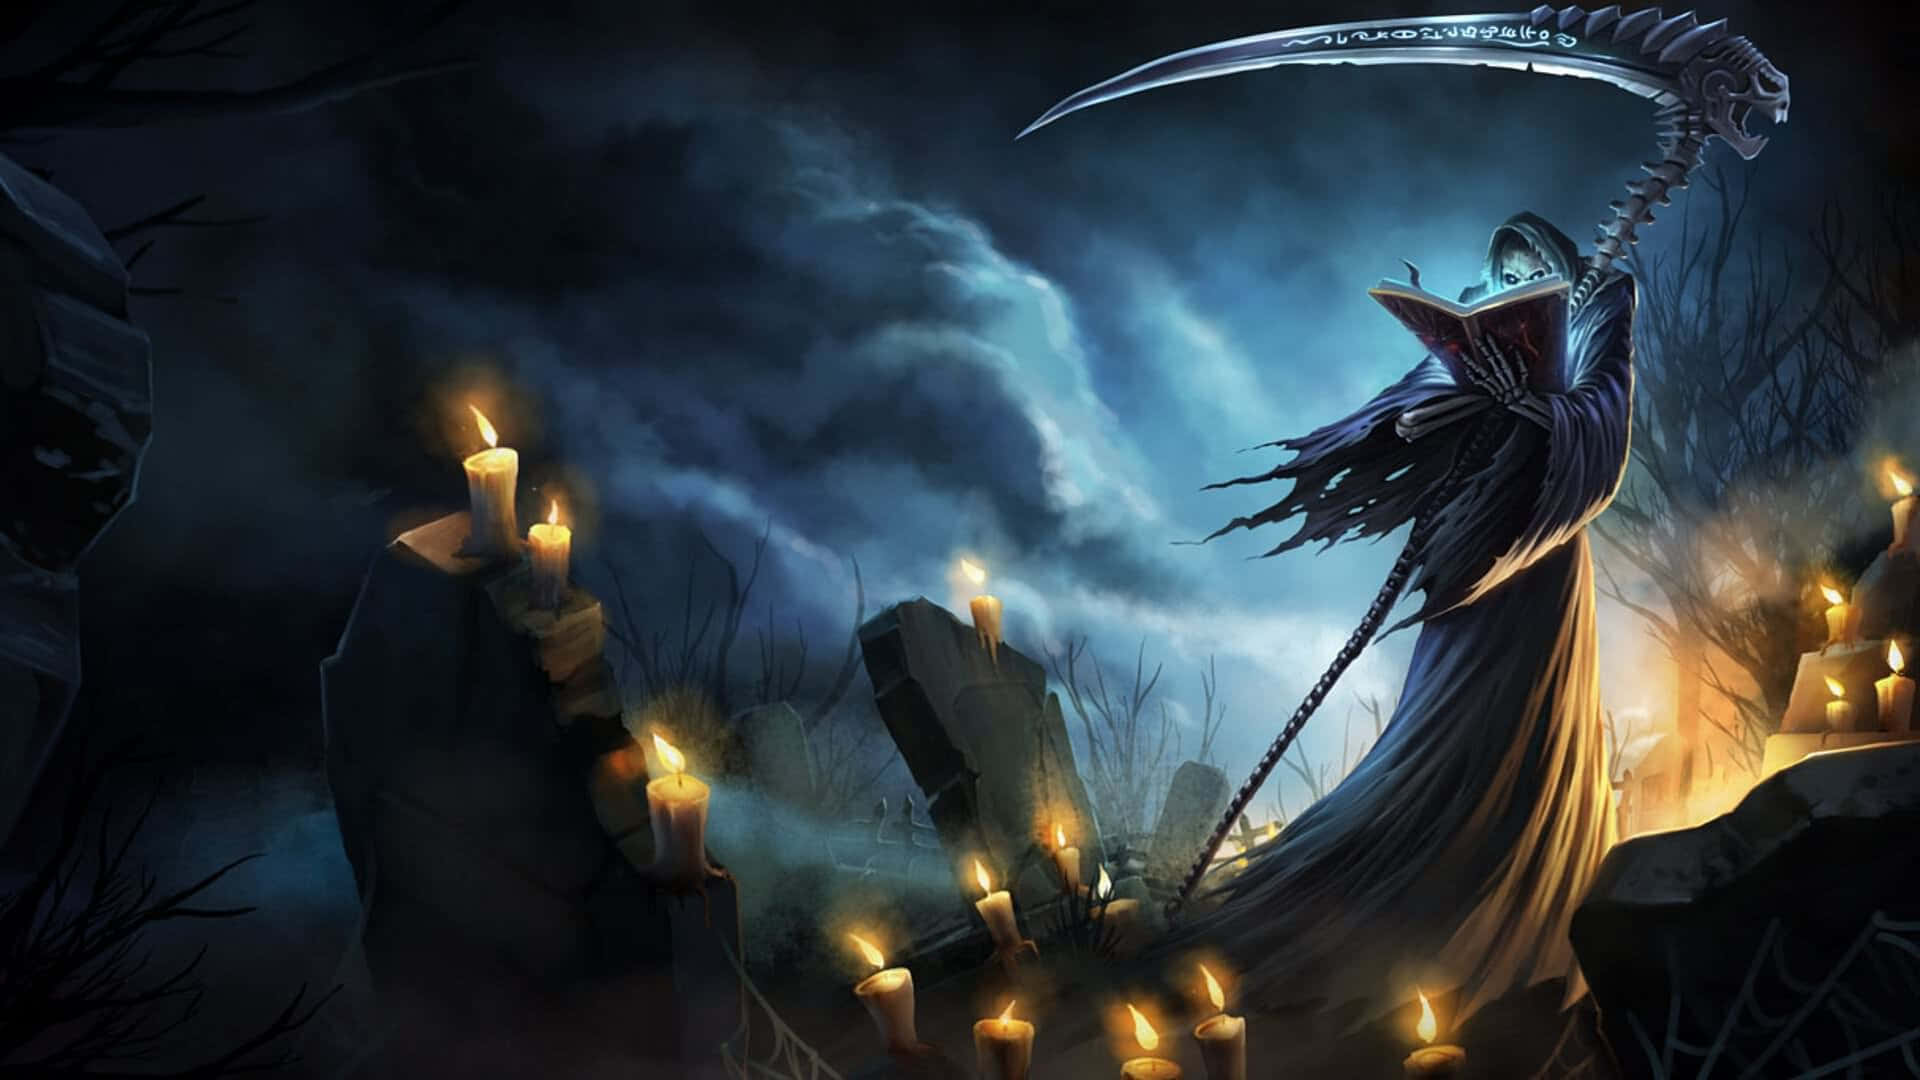 Grim Reaper Standing in Foggy Darkness